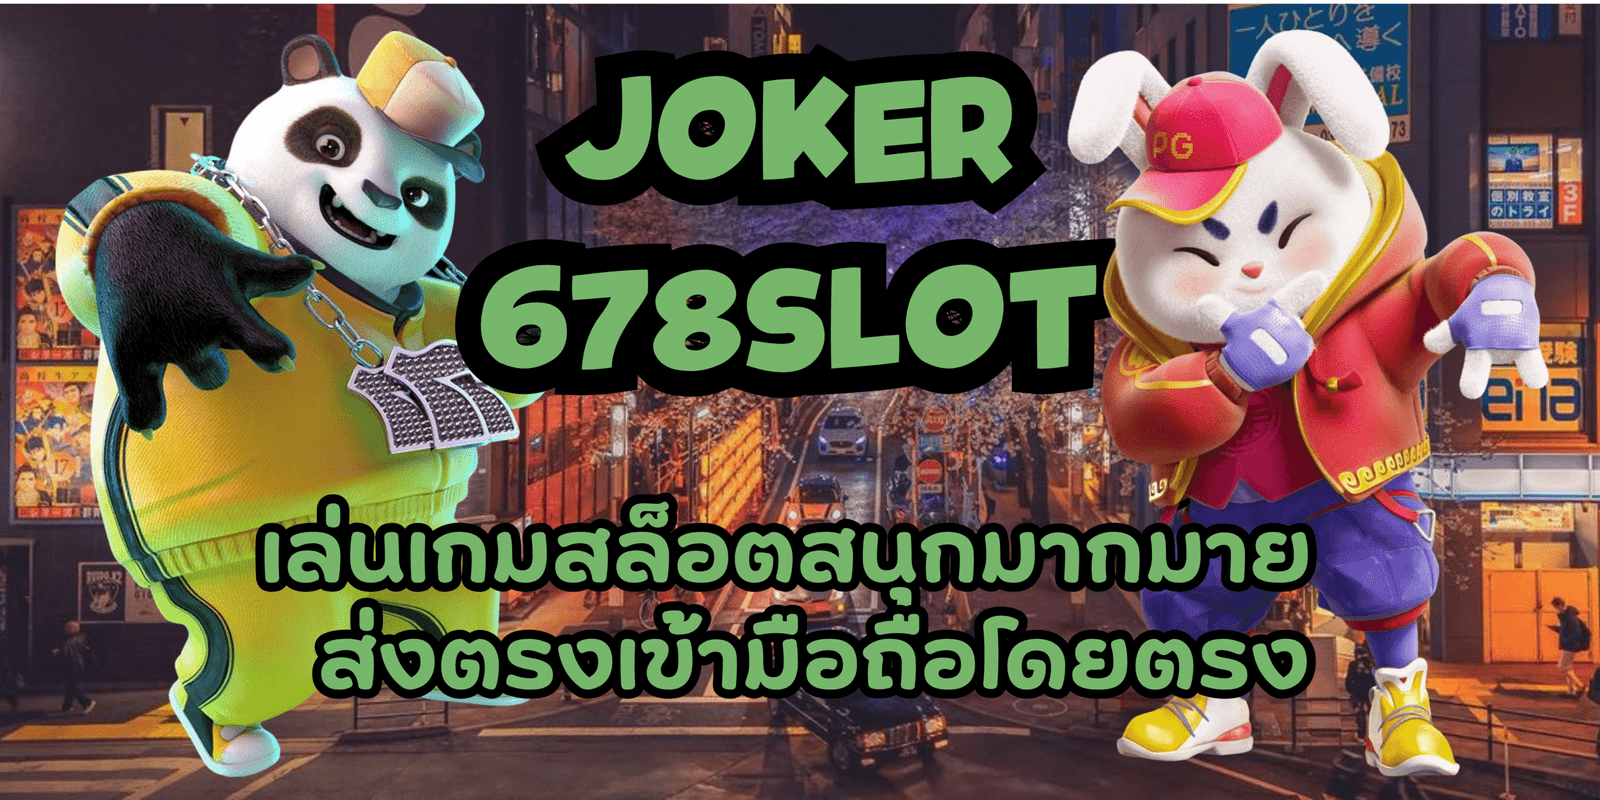 Joker678-slot- เล่นเกมสล็อตสนุก